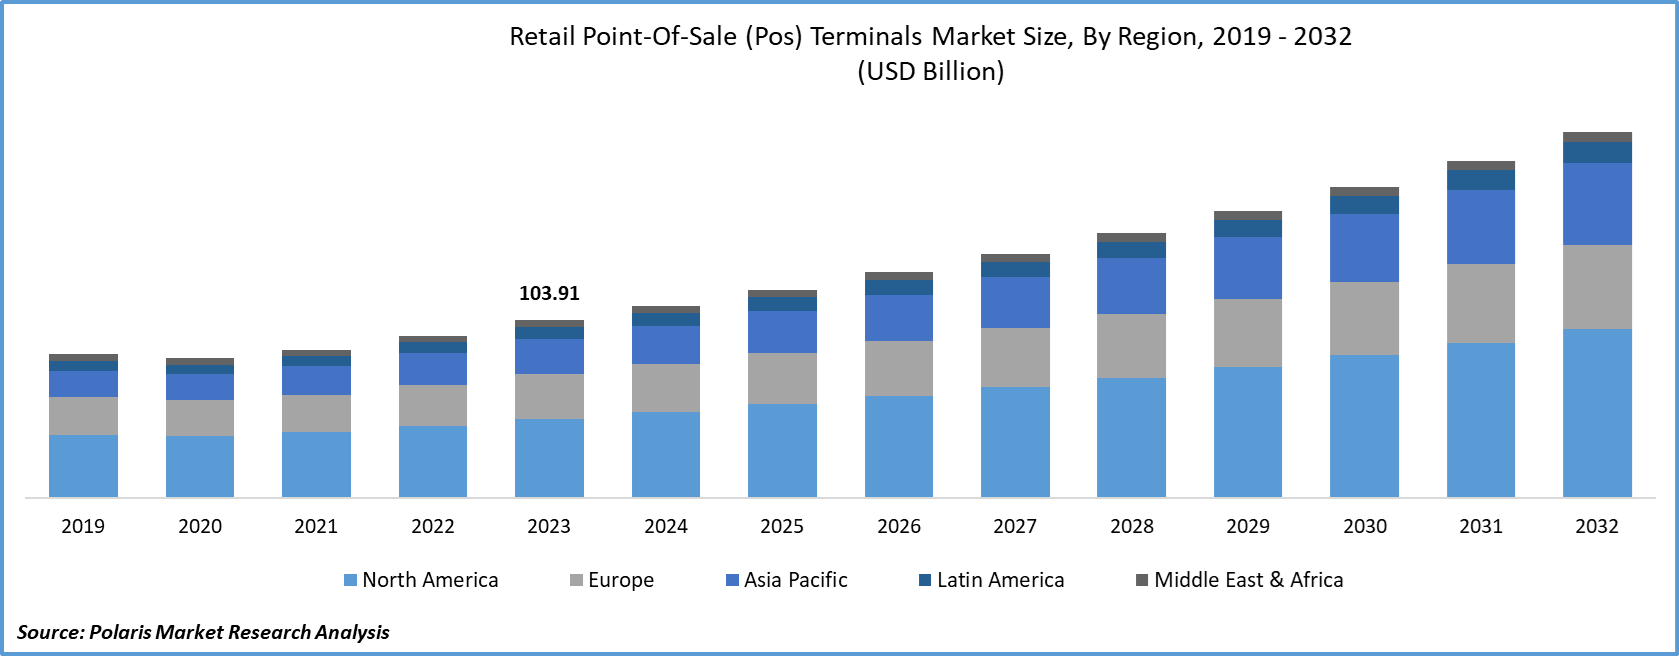 Retail Point-of-Sale (POS) Terminals Market Size